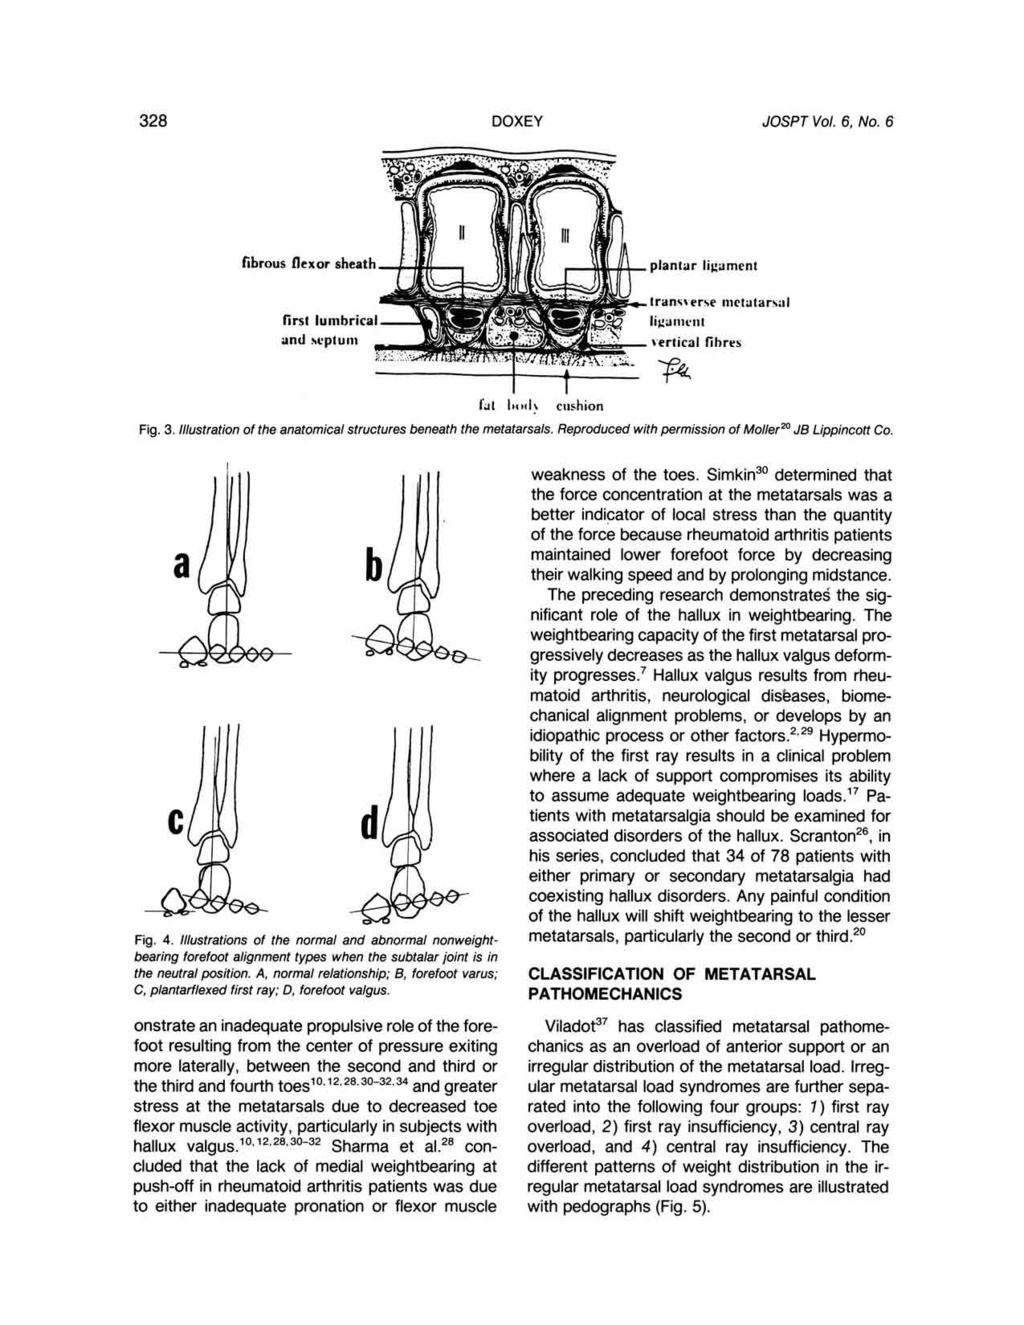 DOXEY JOSPT Vol. 6, No. 6 fibrous flexor sheath lirst lunibrical and scptunl plantar ligament trancrerse mctatars;~i liga~~~t*t~t vertical fihres R Fig. 3.